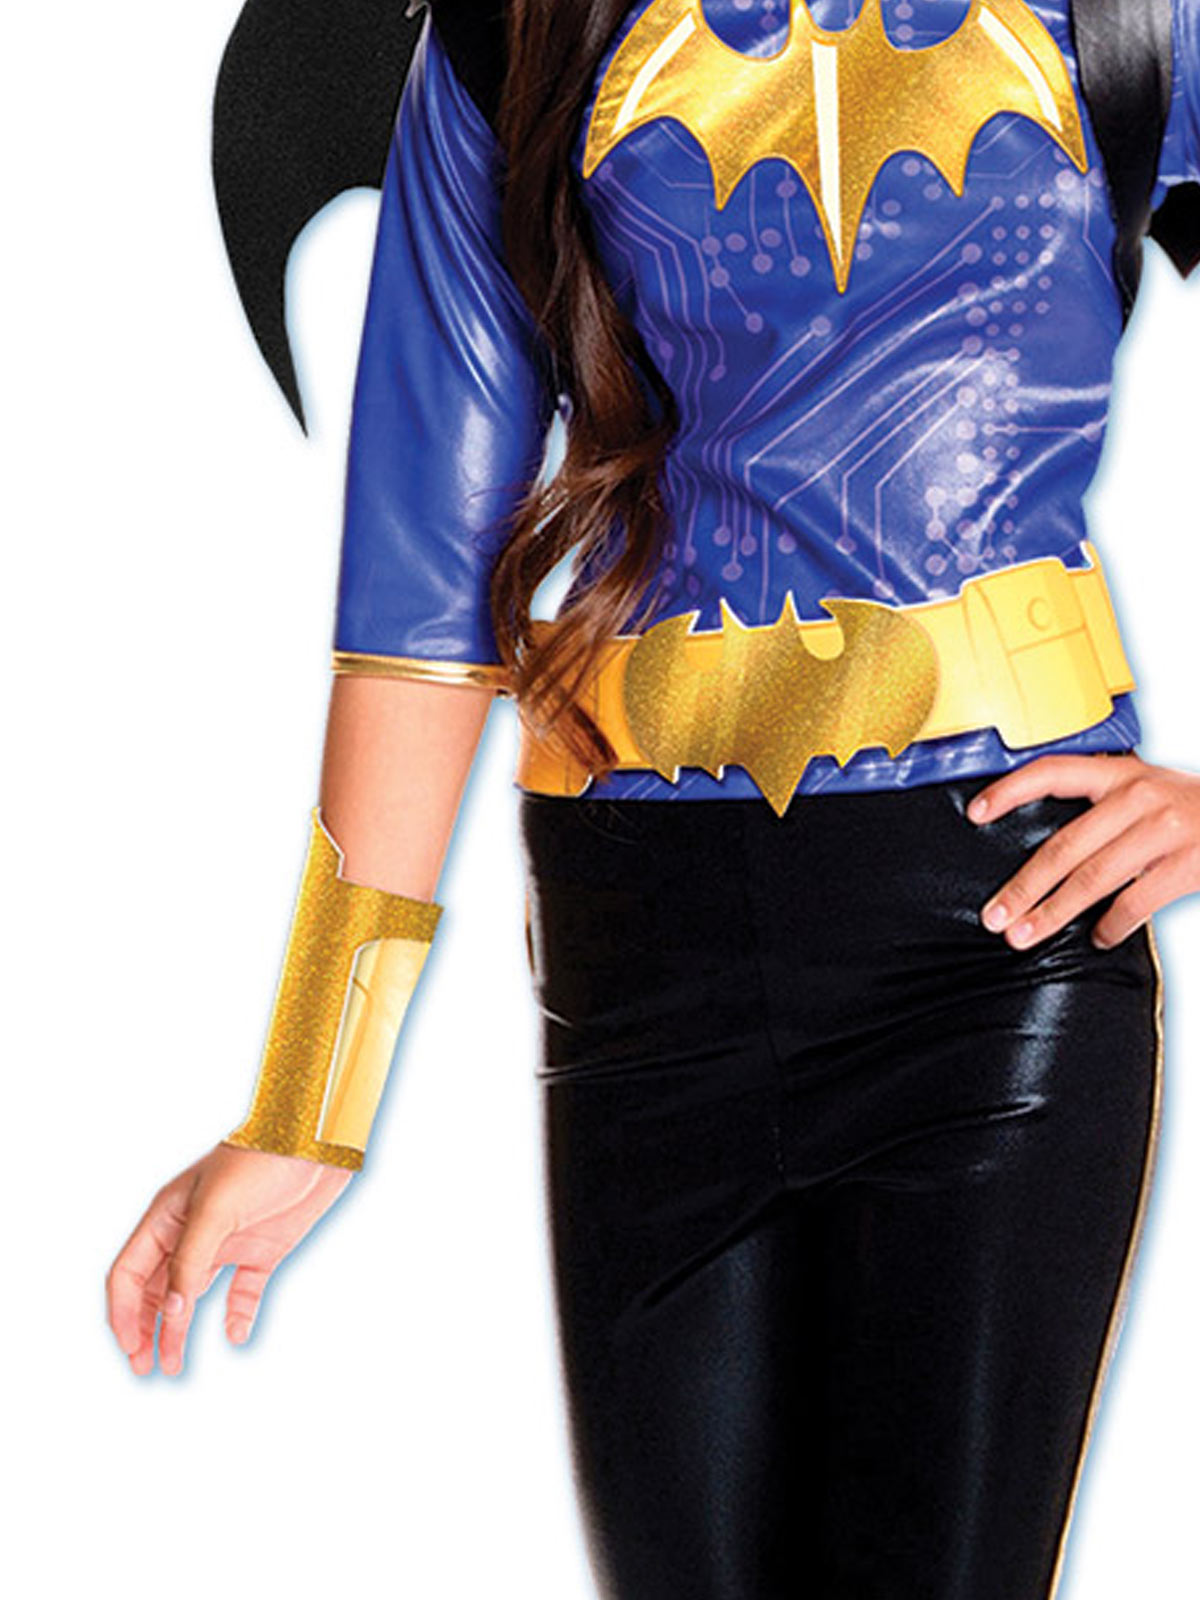 Batgirl DC Superhero Gilrs Child Deluxed Licensed Costume